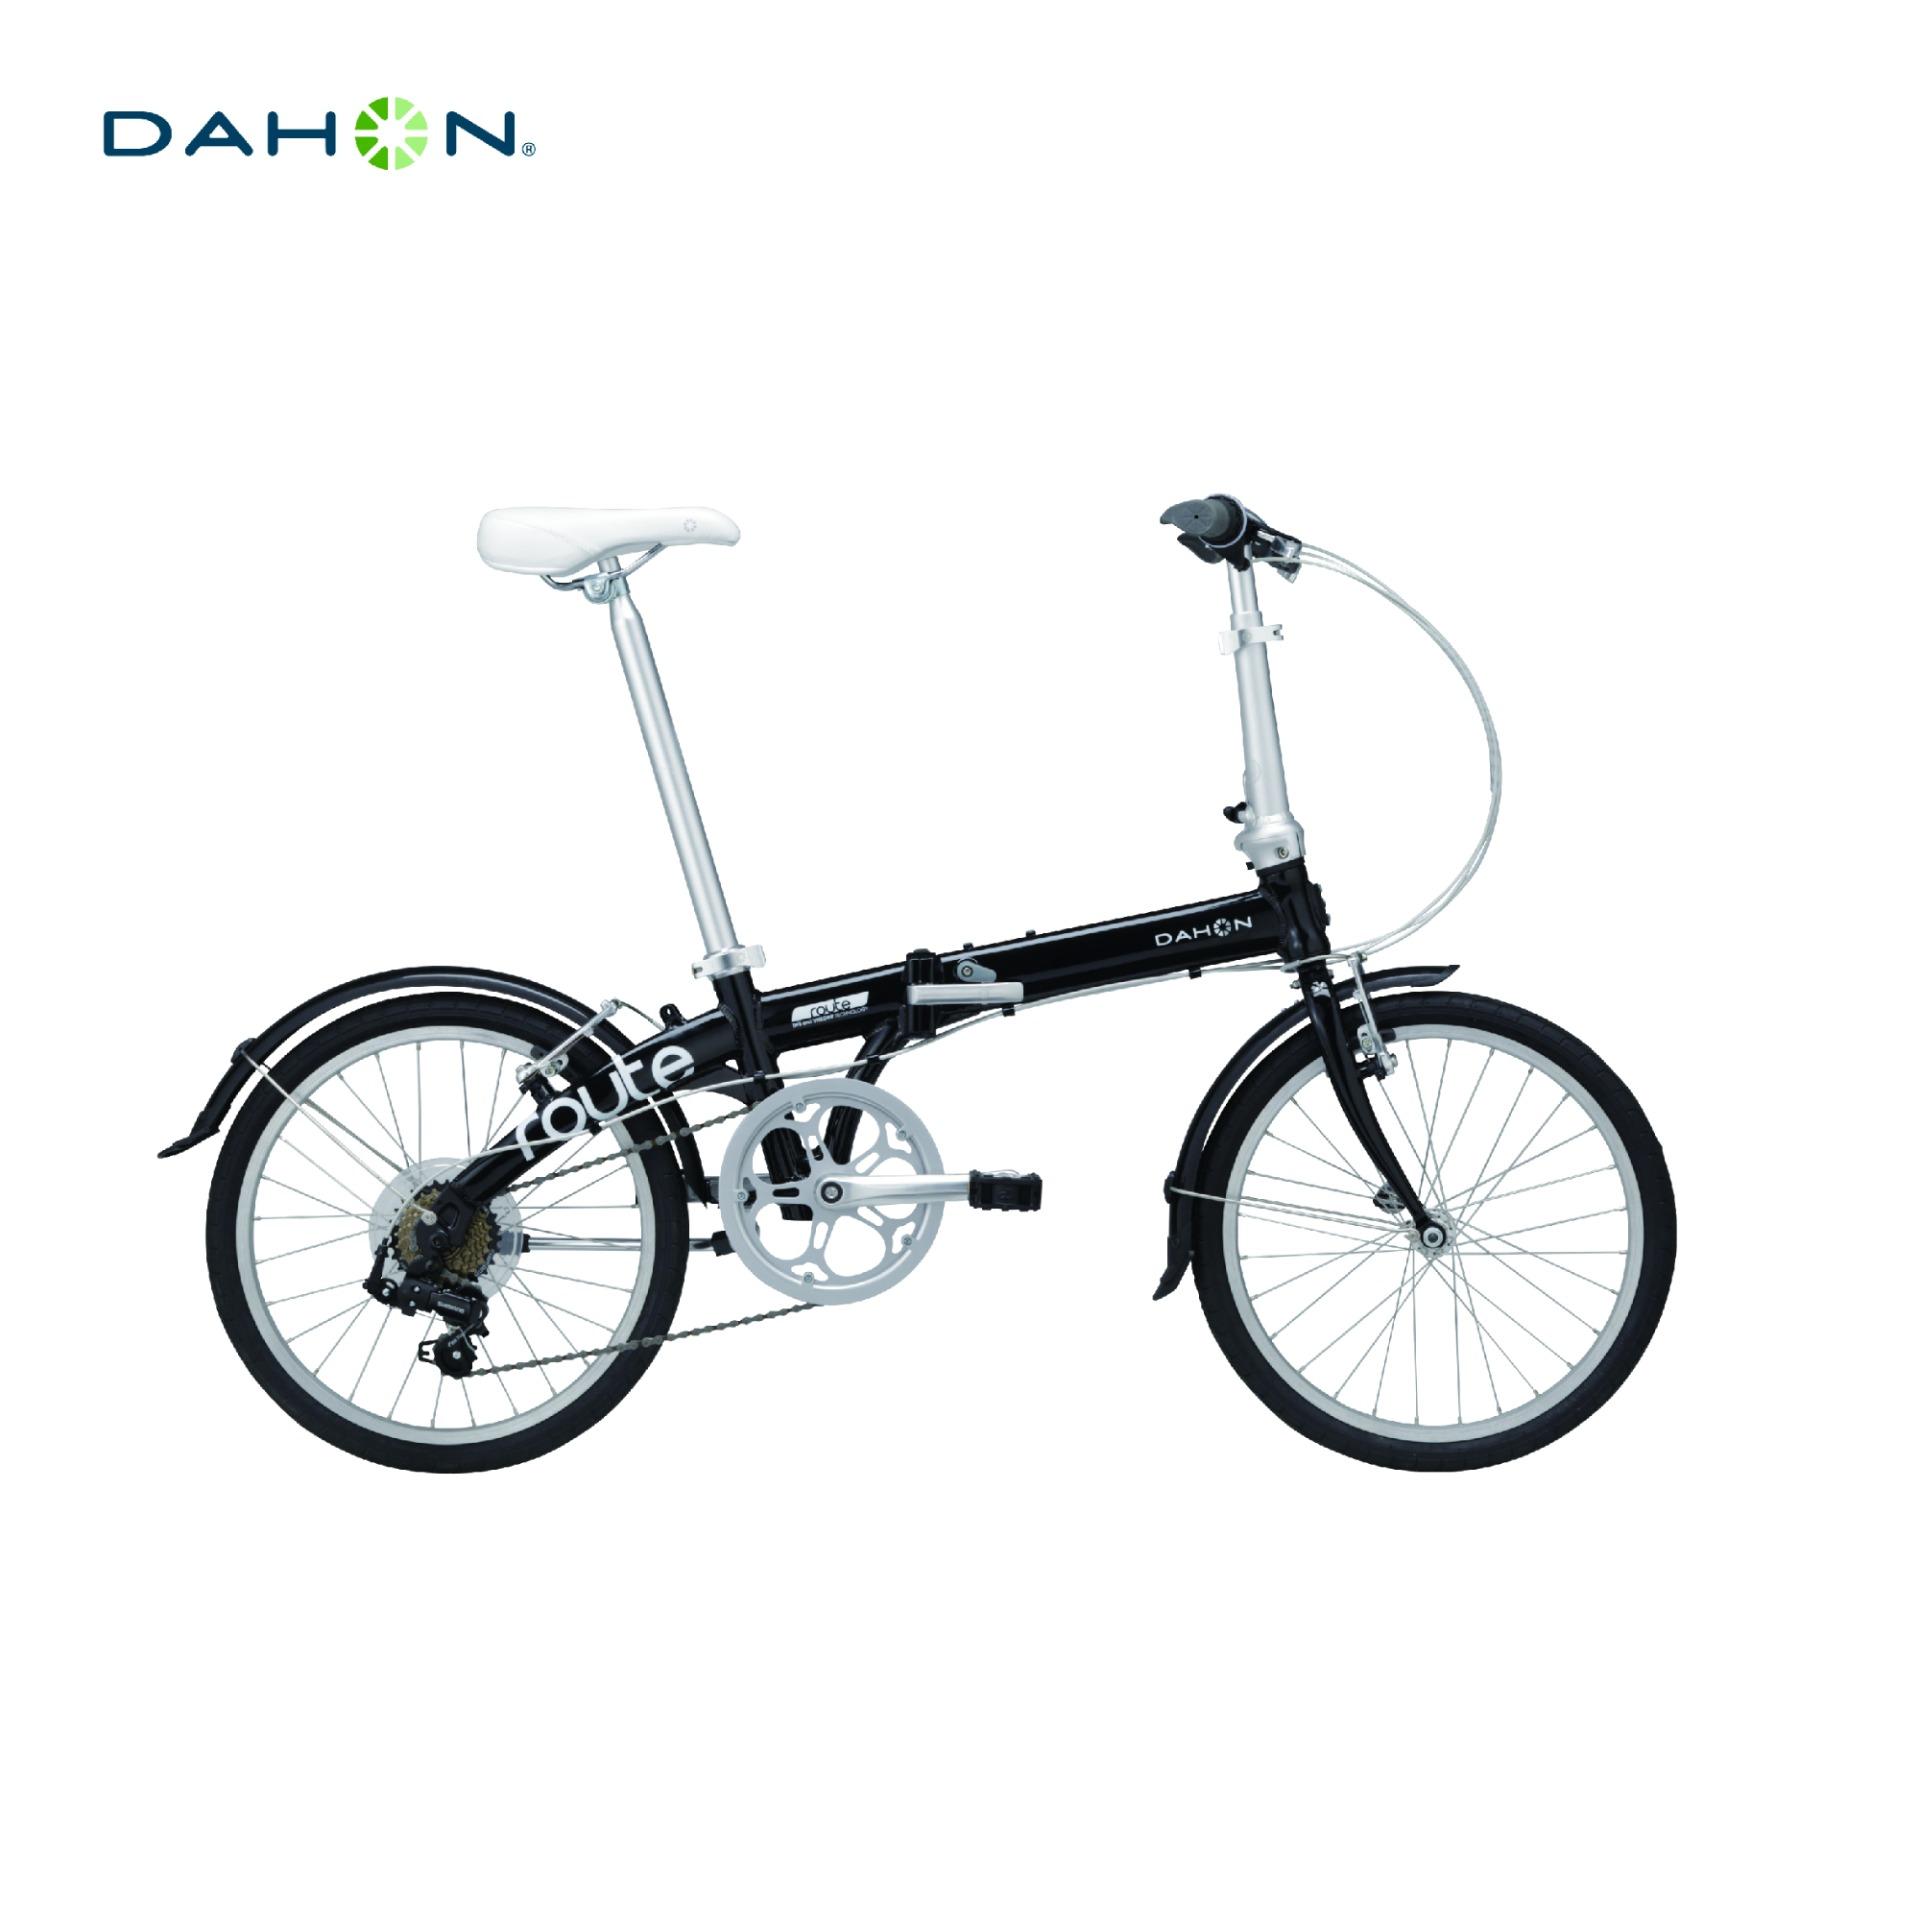 dahon folding bike price